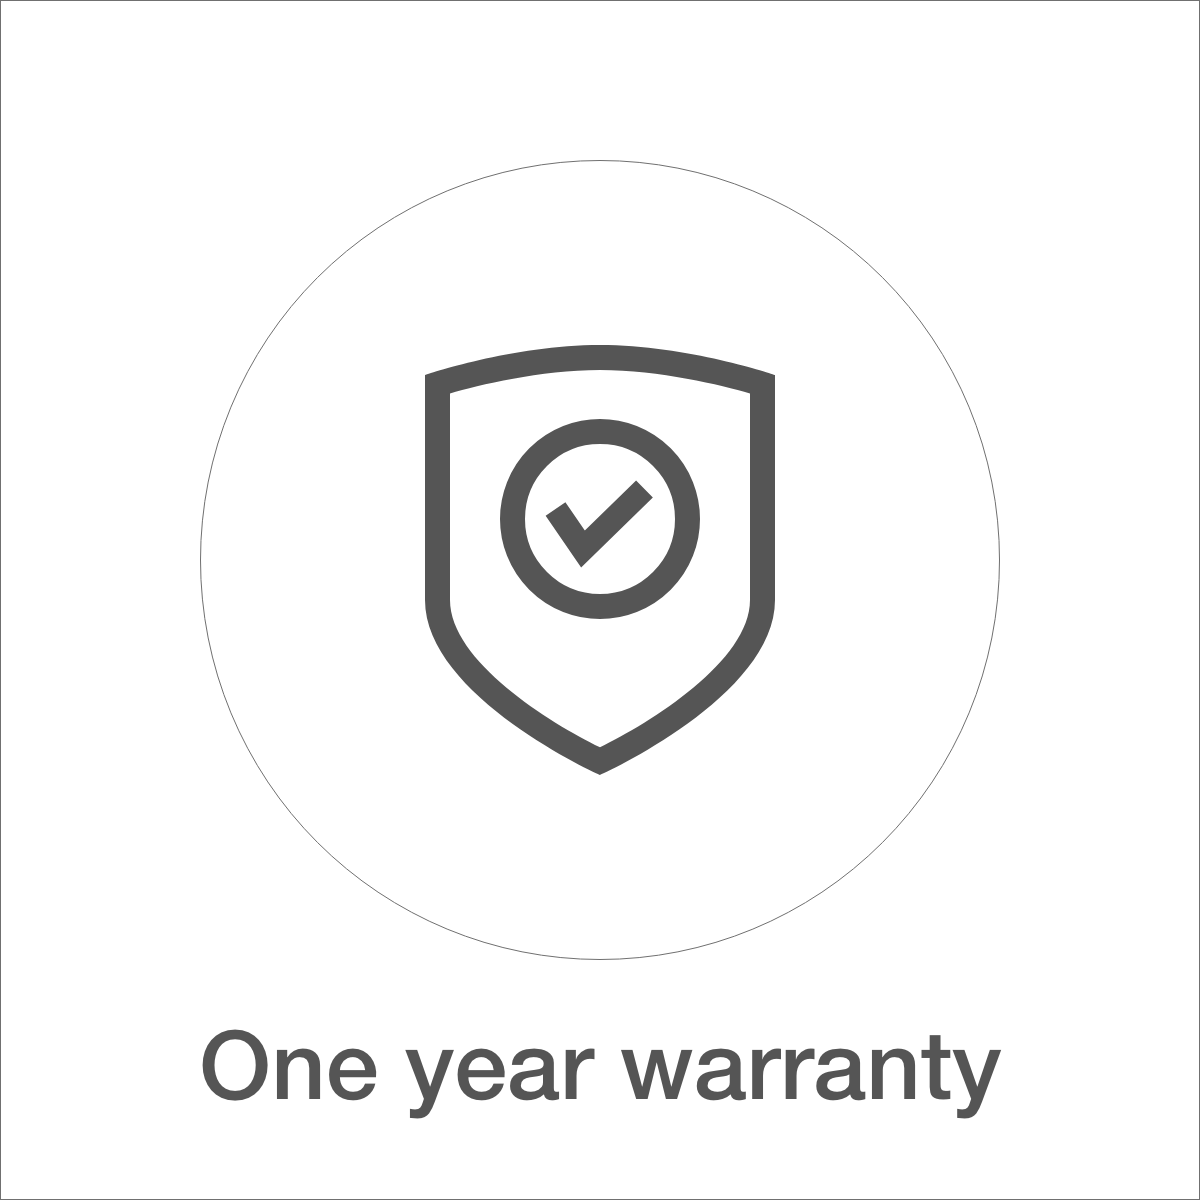 One year warranty icon